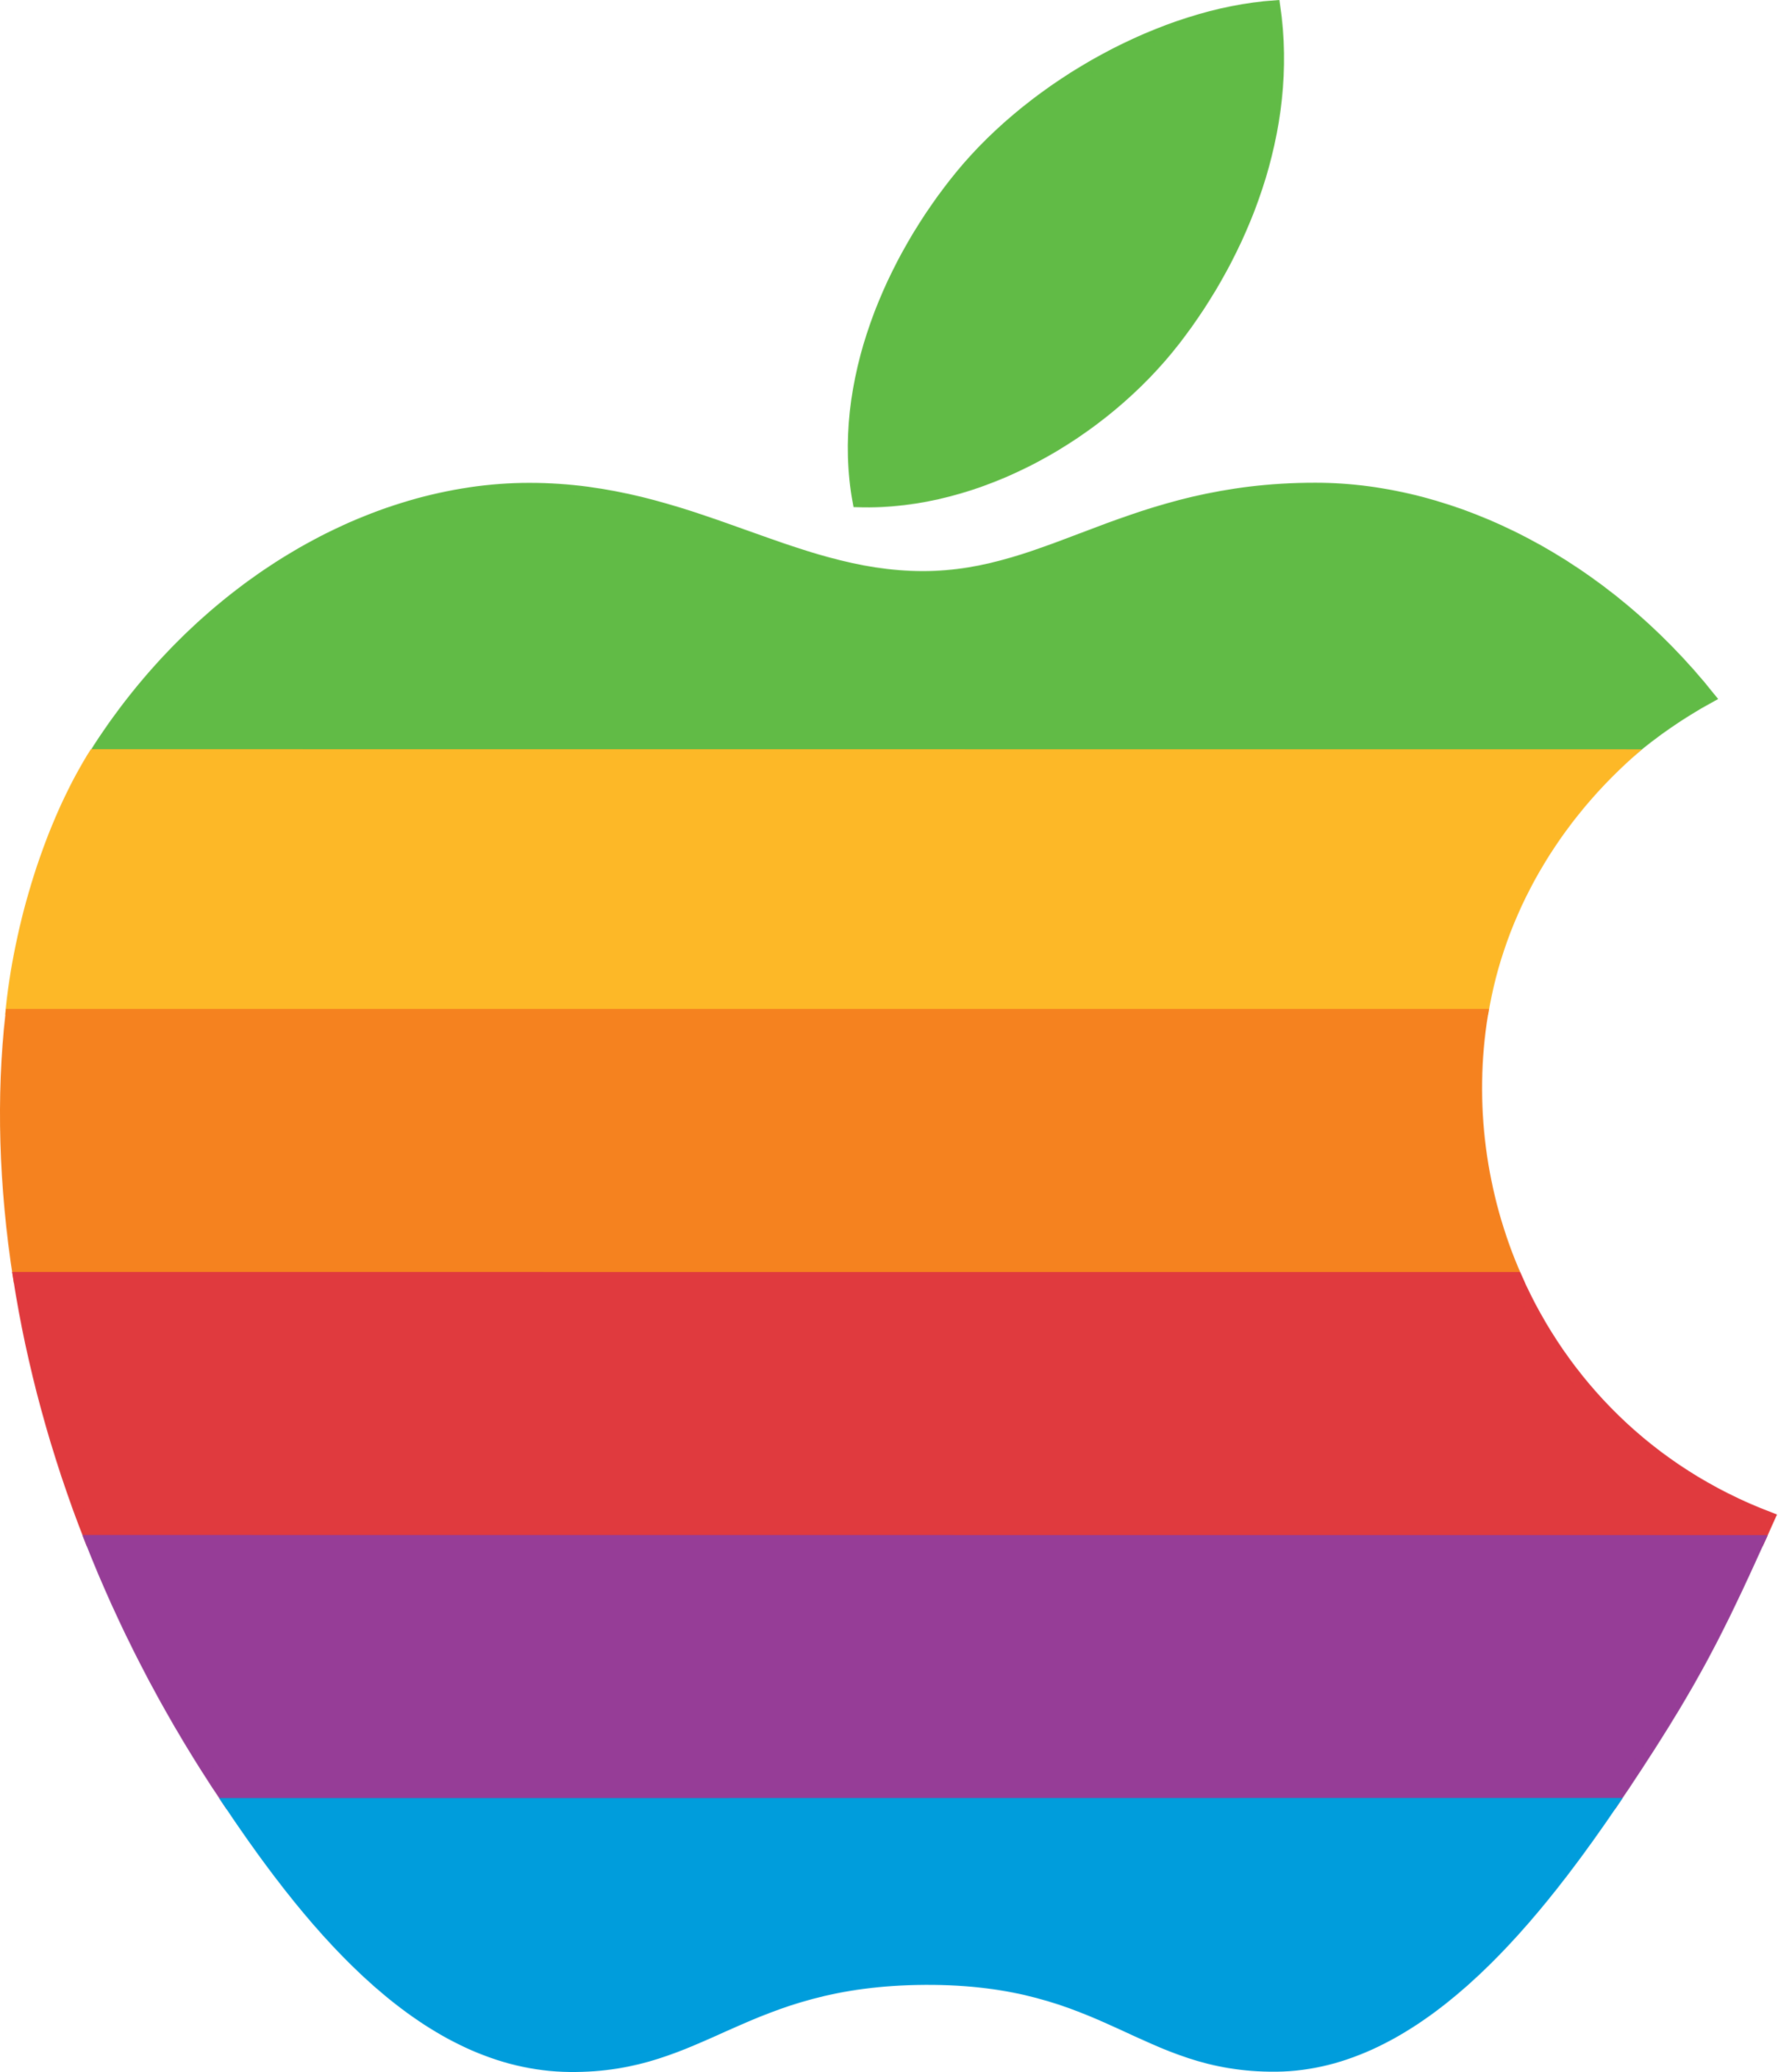 Appleの初期のレインボーロゴ。